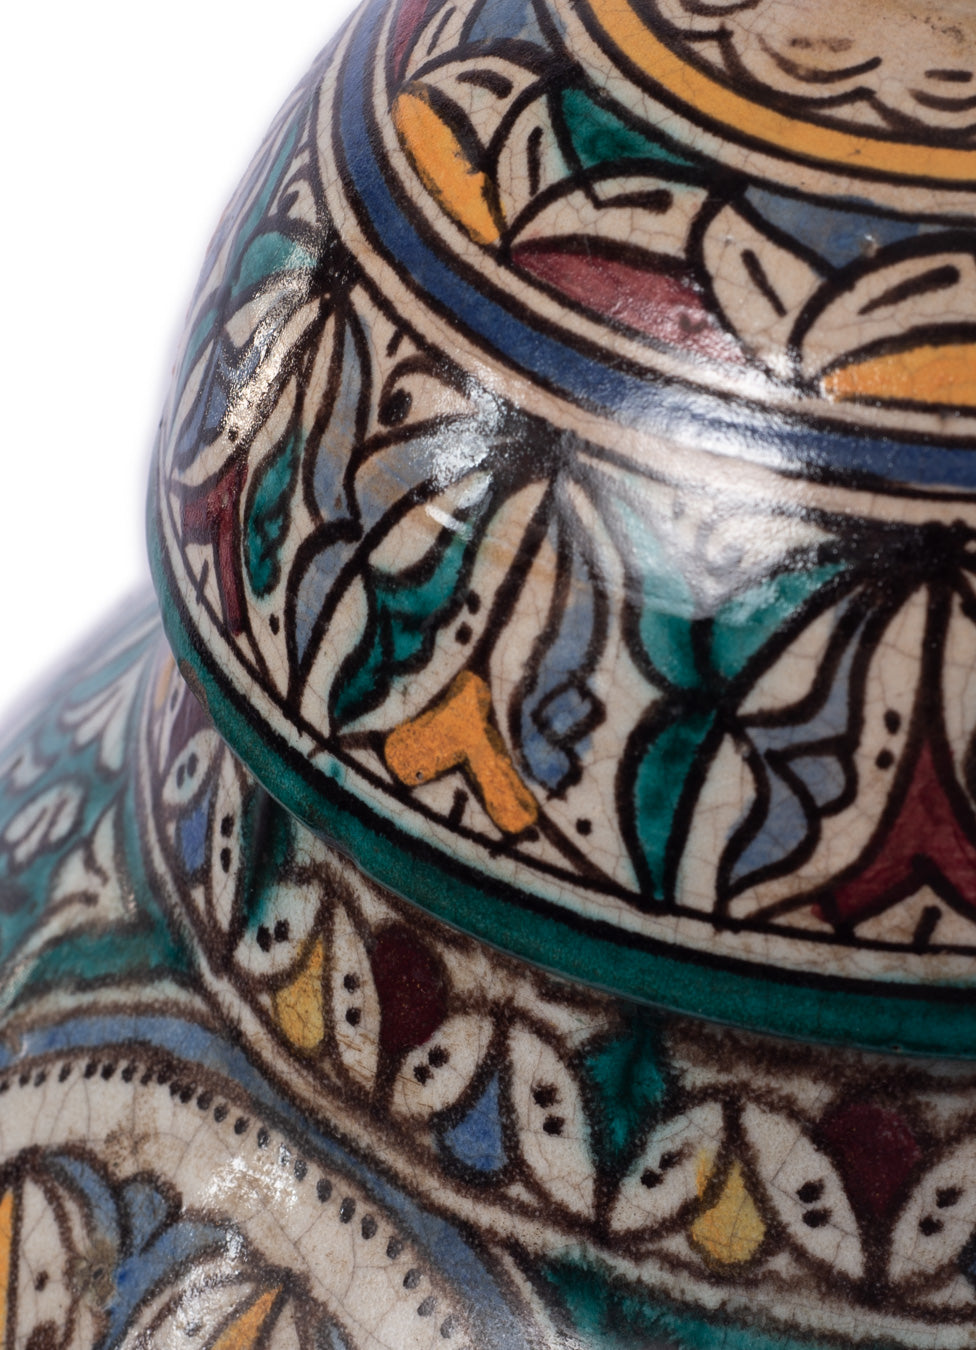 Large Vintage Moroccan Ceramic Jar with Lid